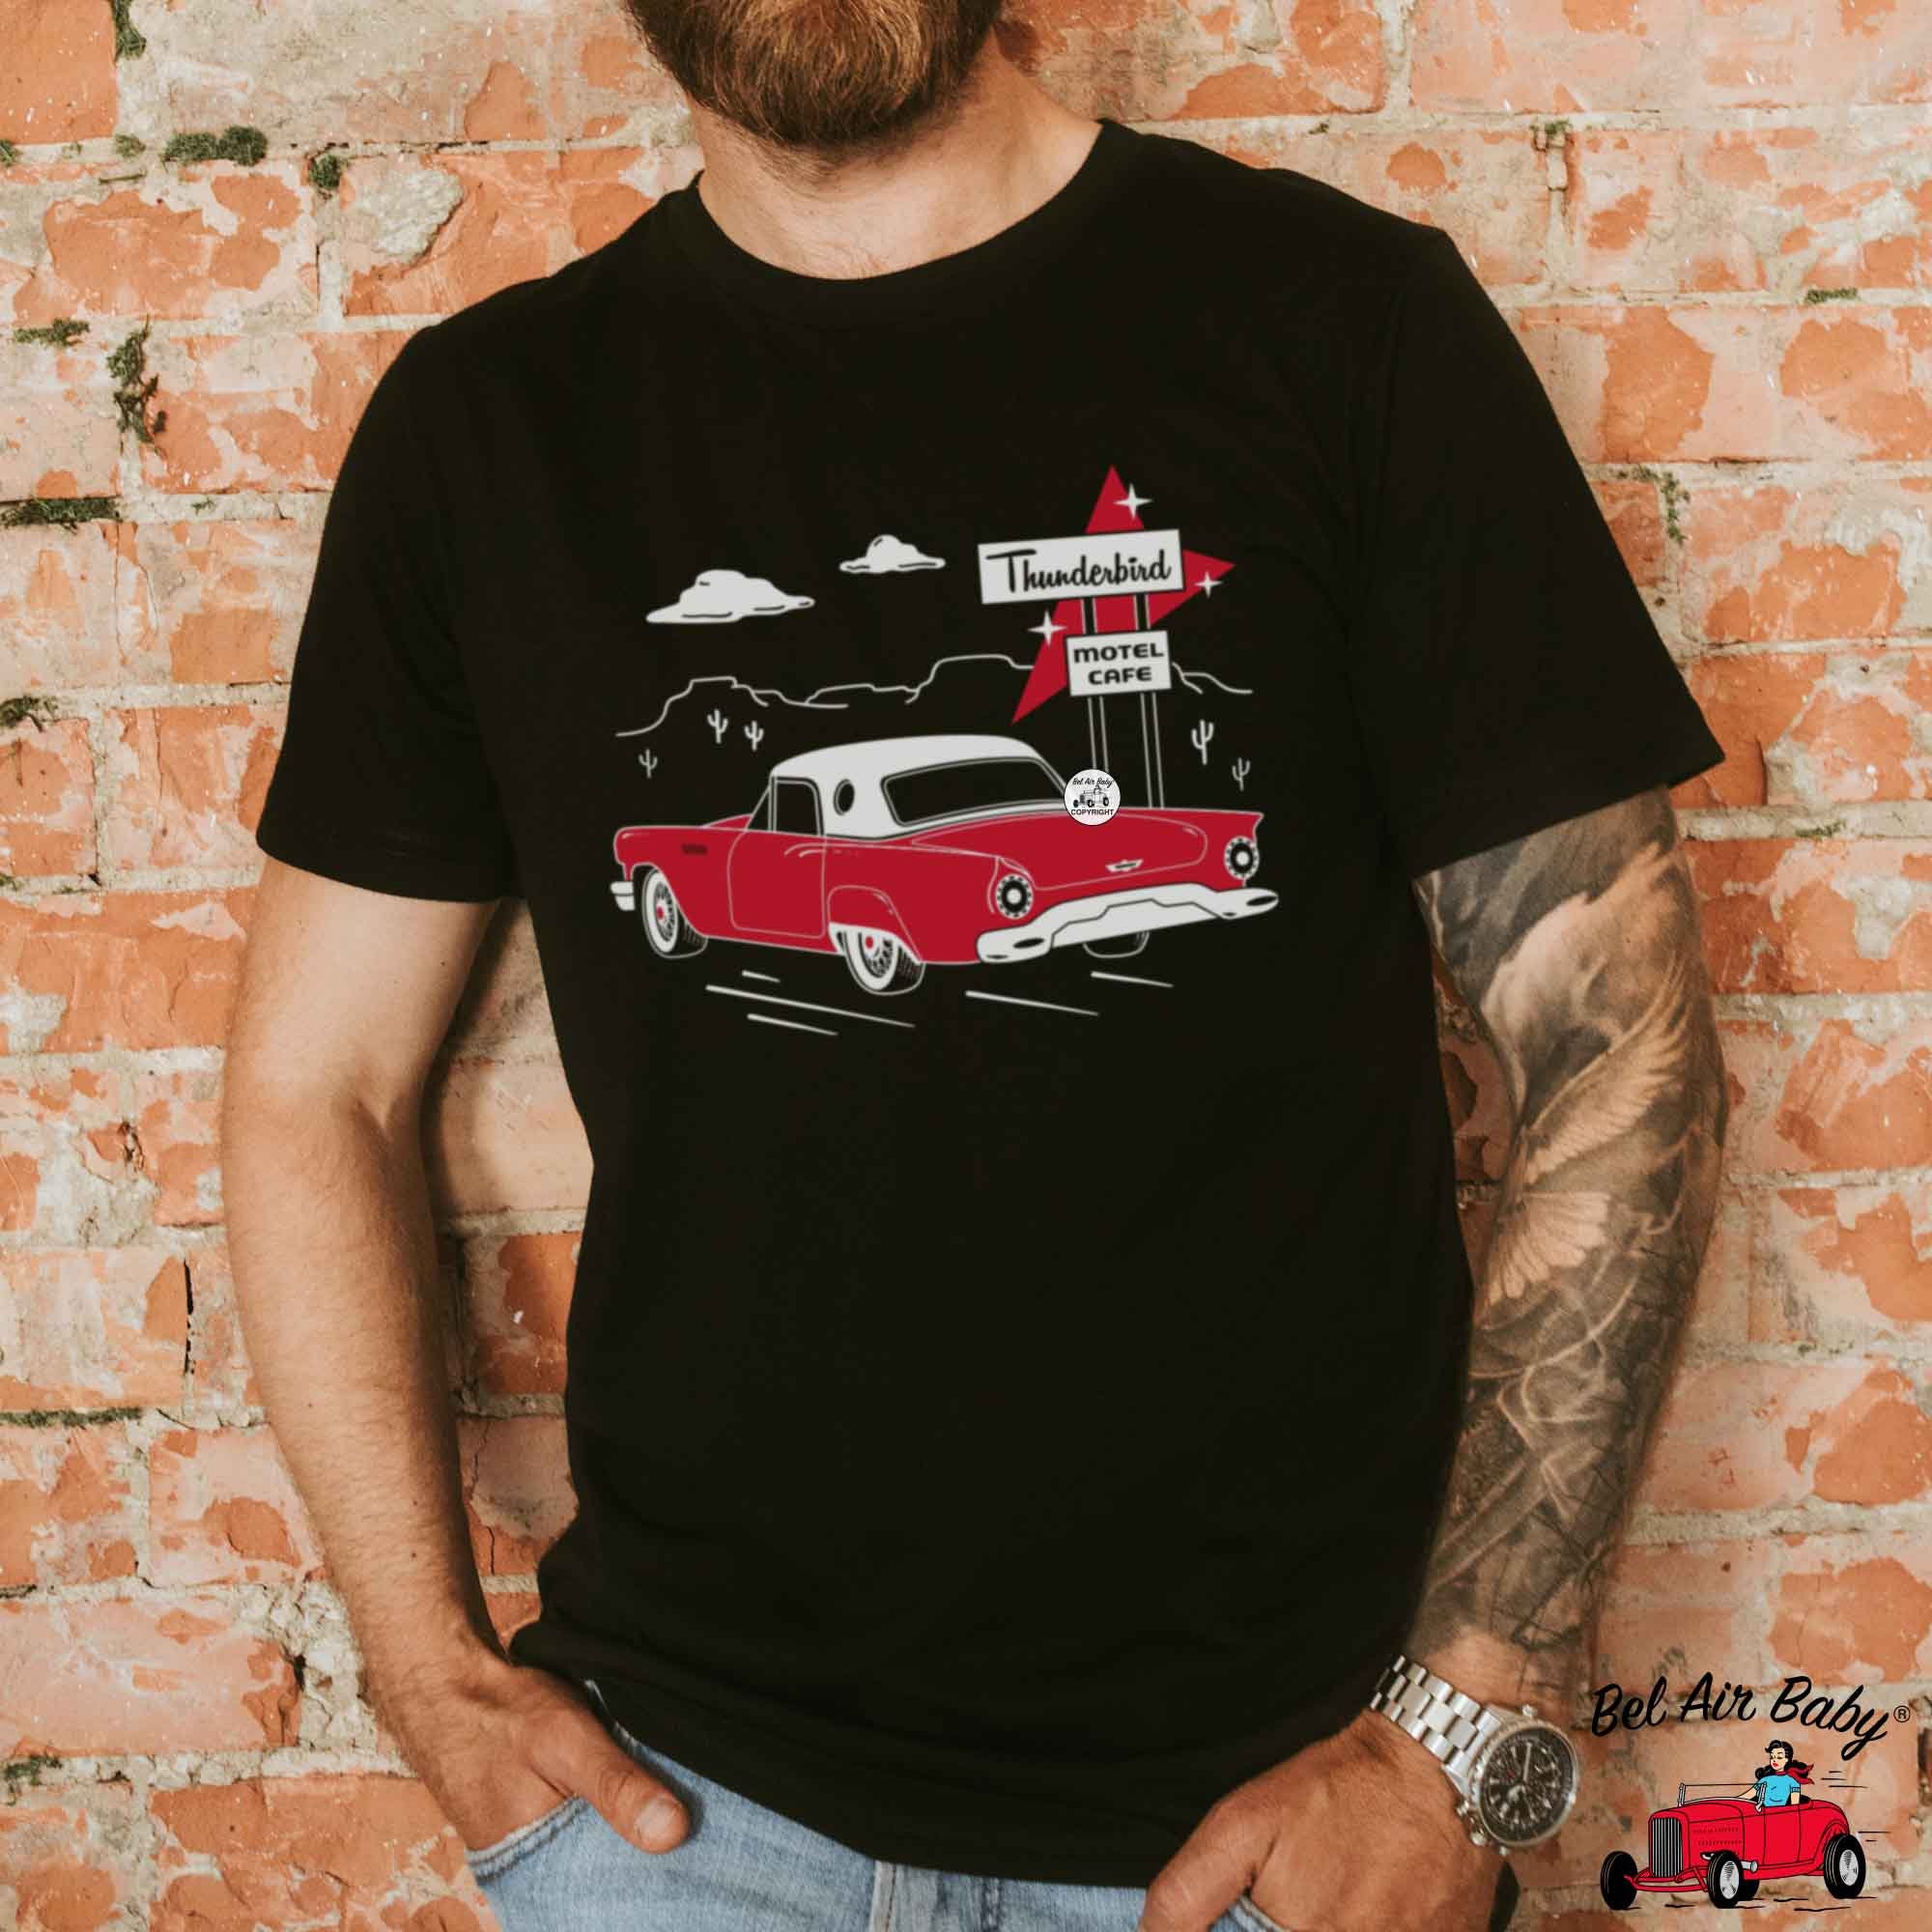 Kustom Vintage Work Shirts & Mechanic Shirts - Dirty Monkey Kustoms USA  GearHead Apparel